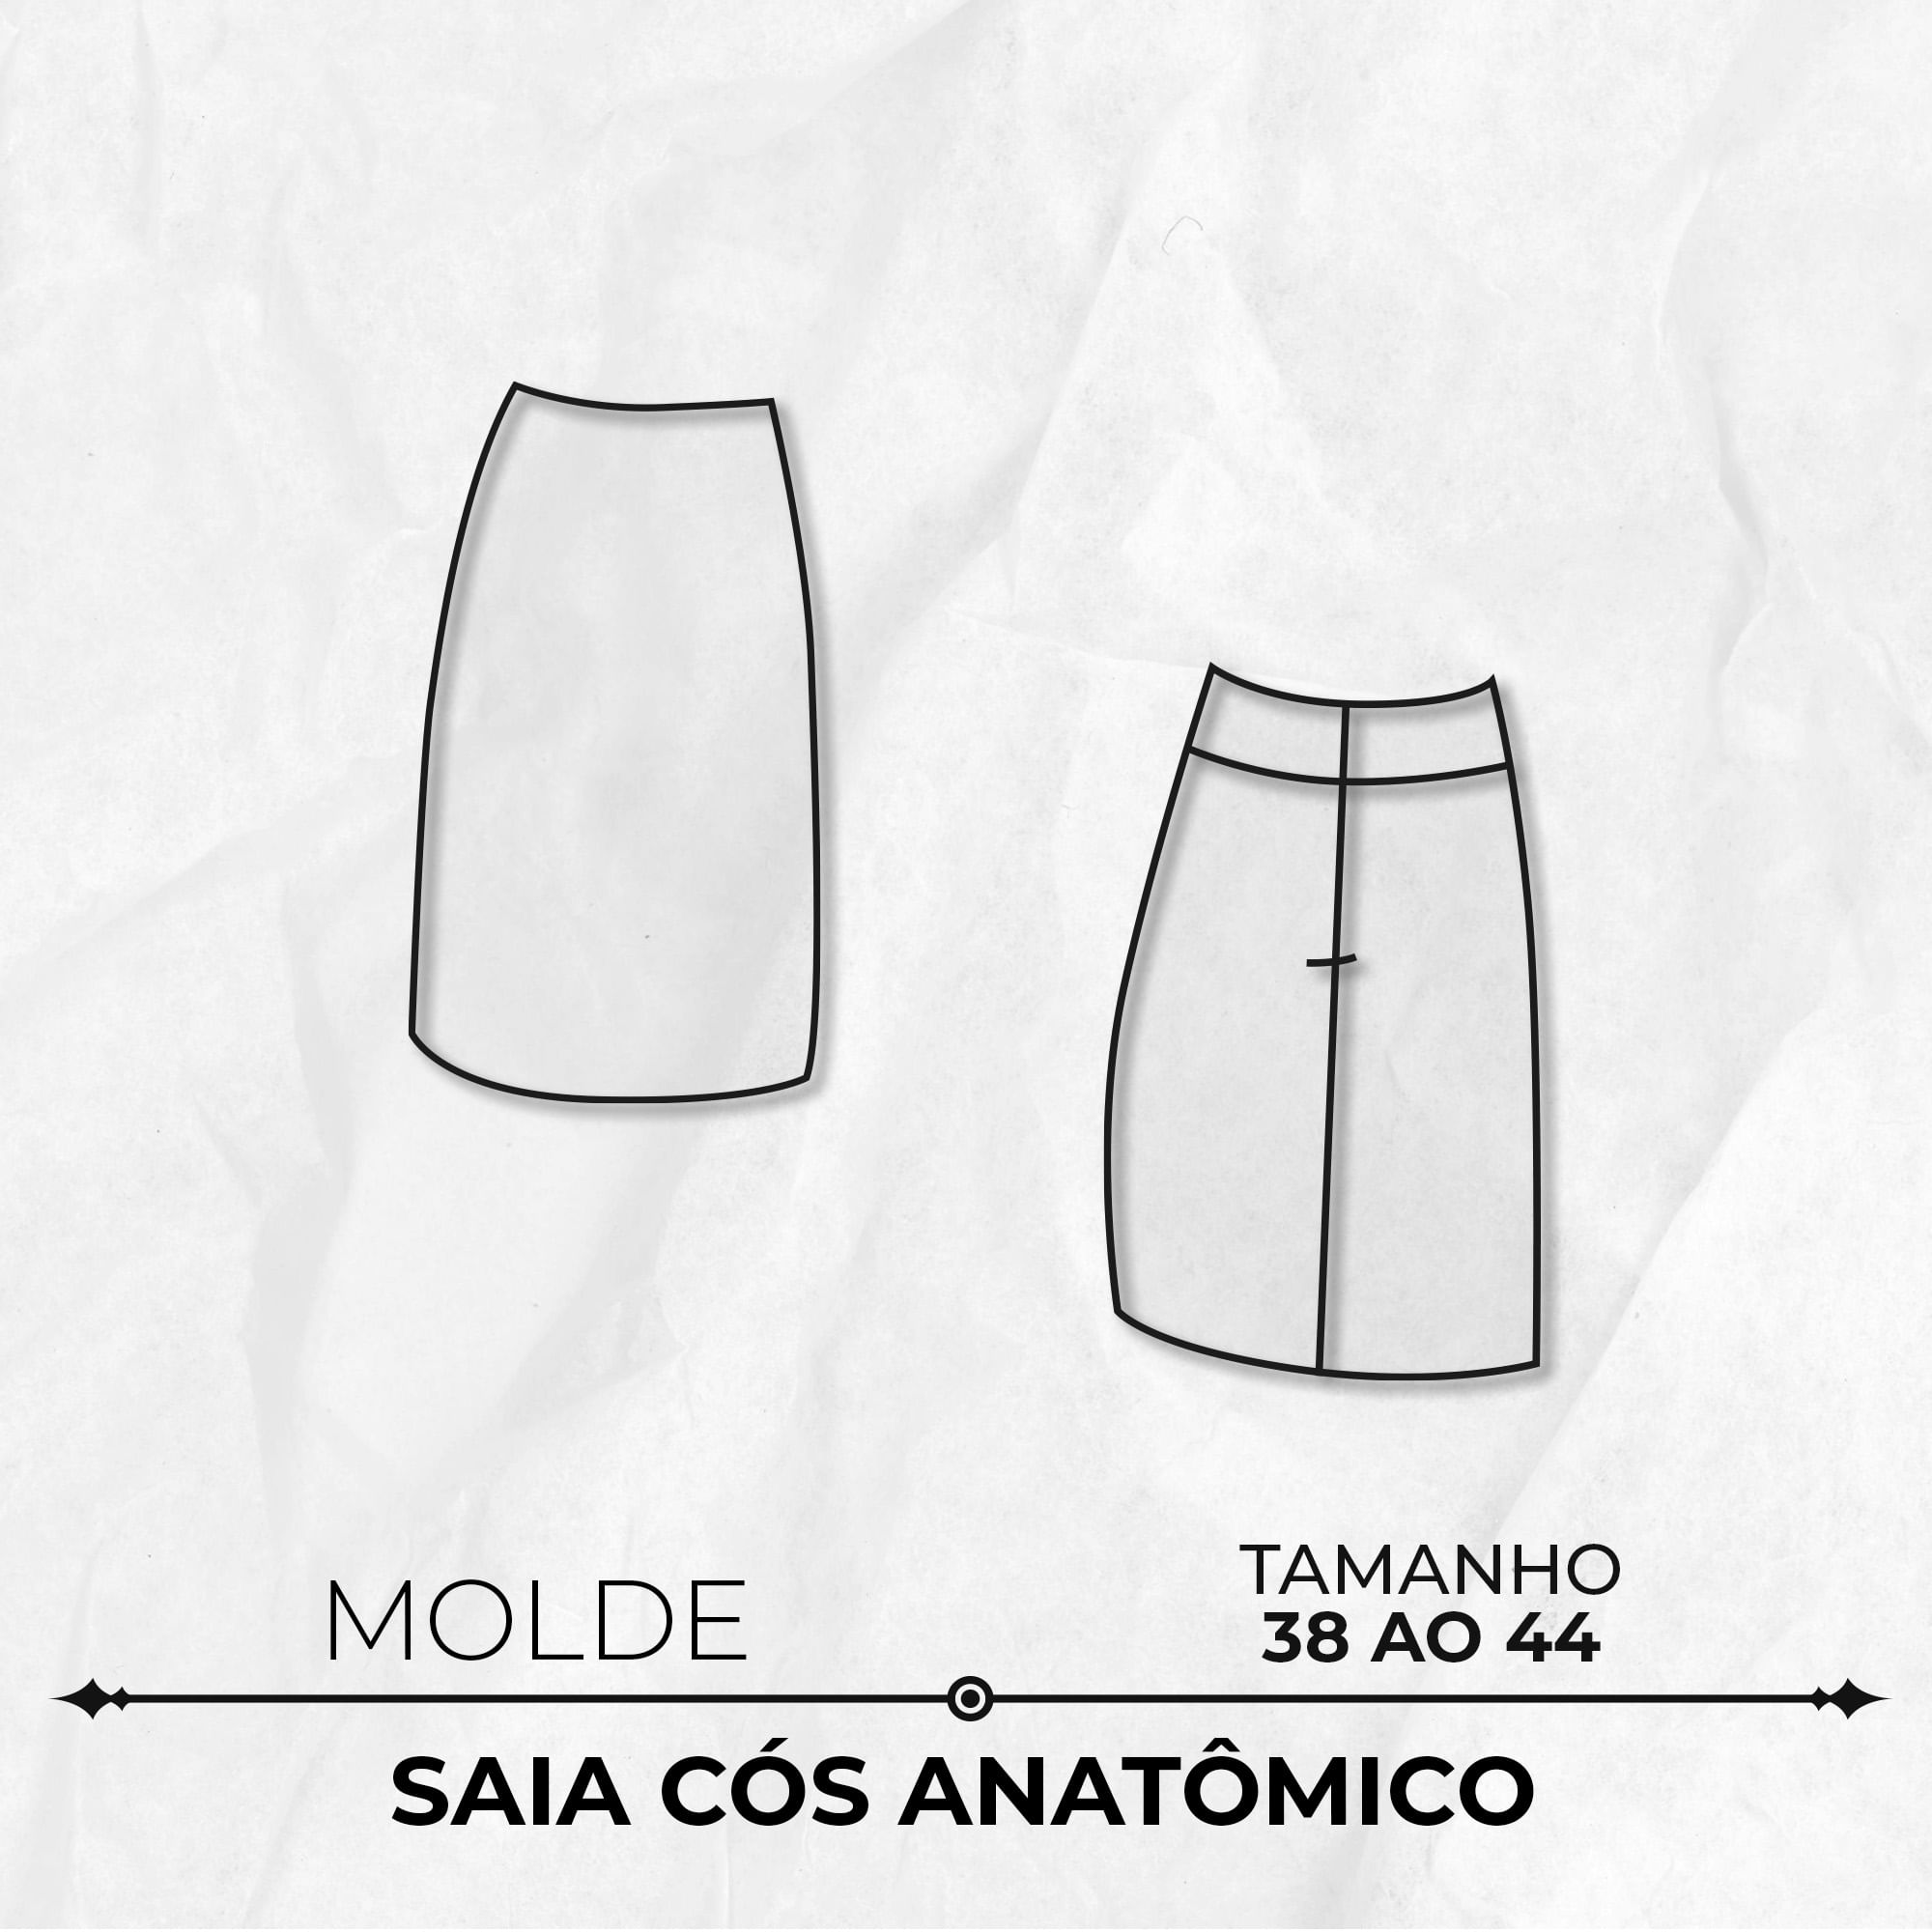 Molde calça pantalona pijama com bolso by Wania Machado - EDITORA